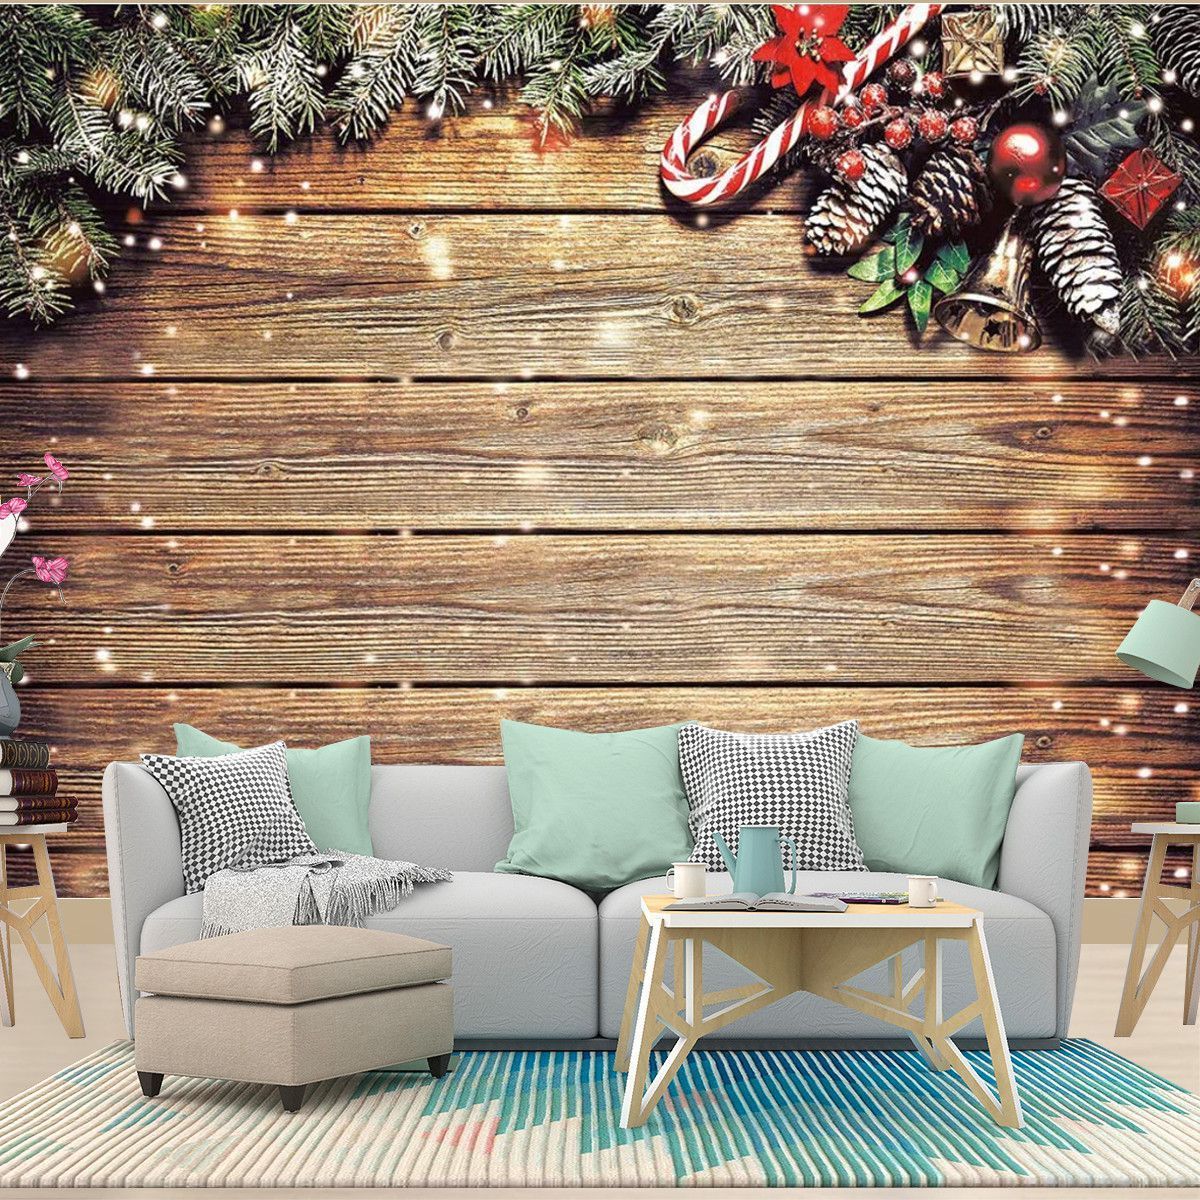 Horizontal-Vertical-Christmas-Photography-Backdrop-Snowflake-Glitter-Wood-Wall-Photo-Background-Stud-1764430